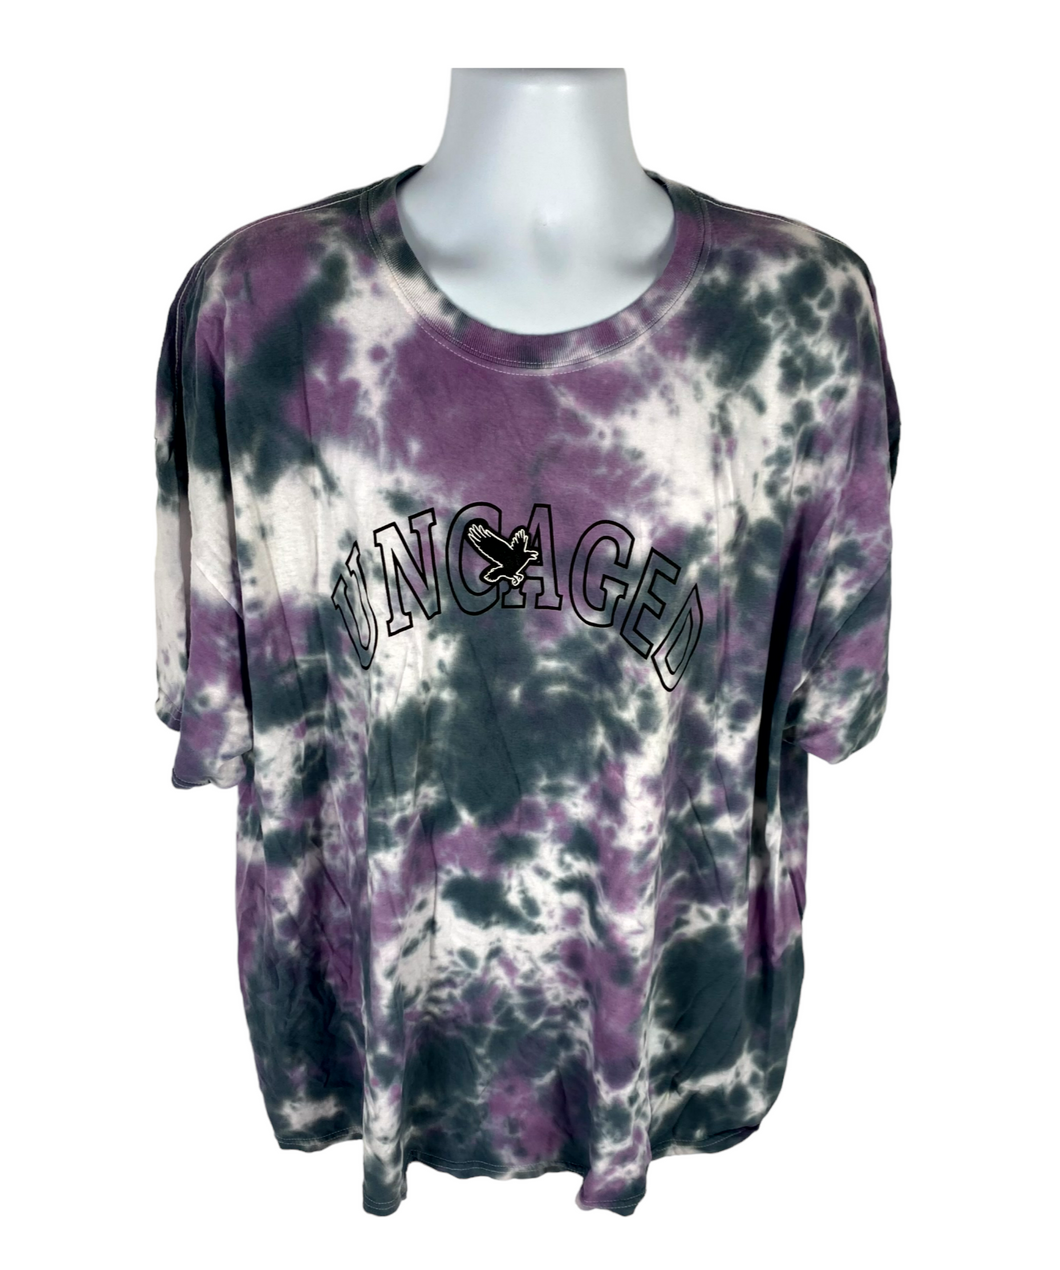 Uncaged Black & Purple Galaxy T-Shirt - 3XL